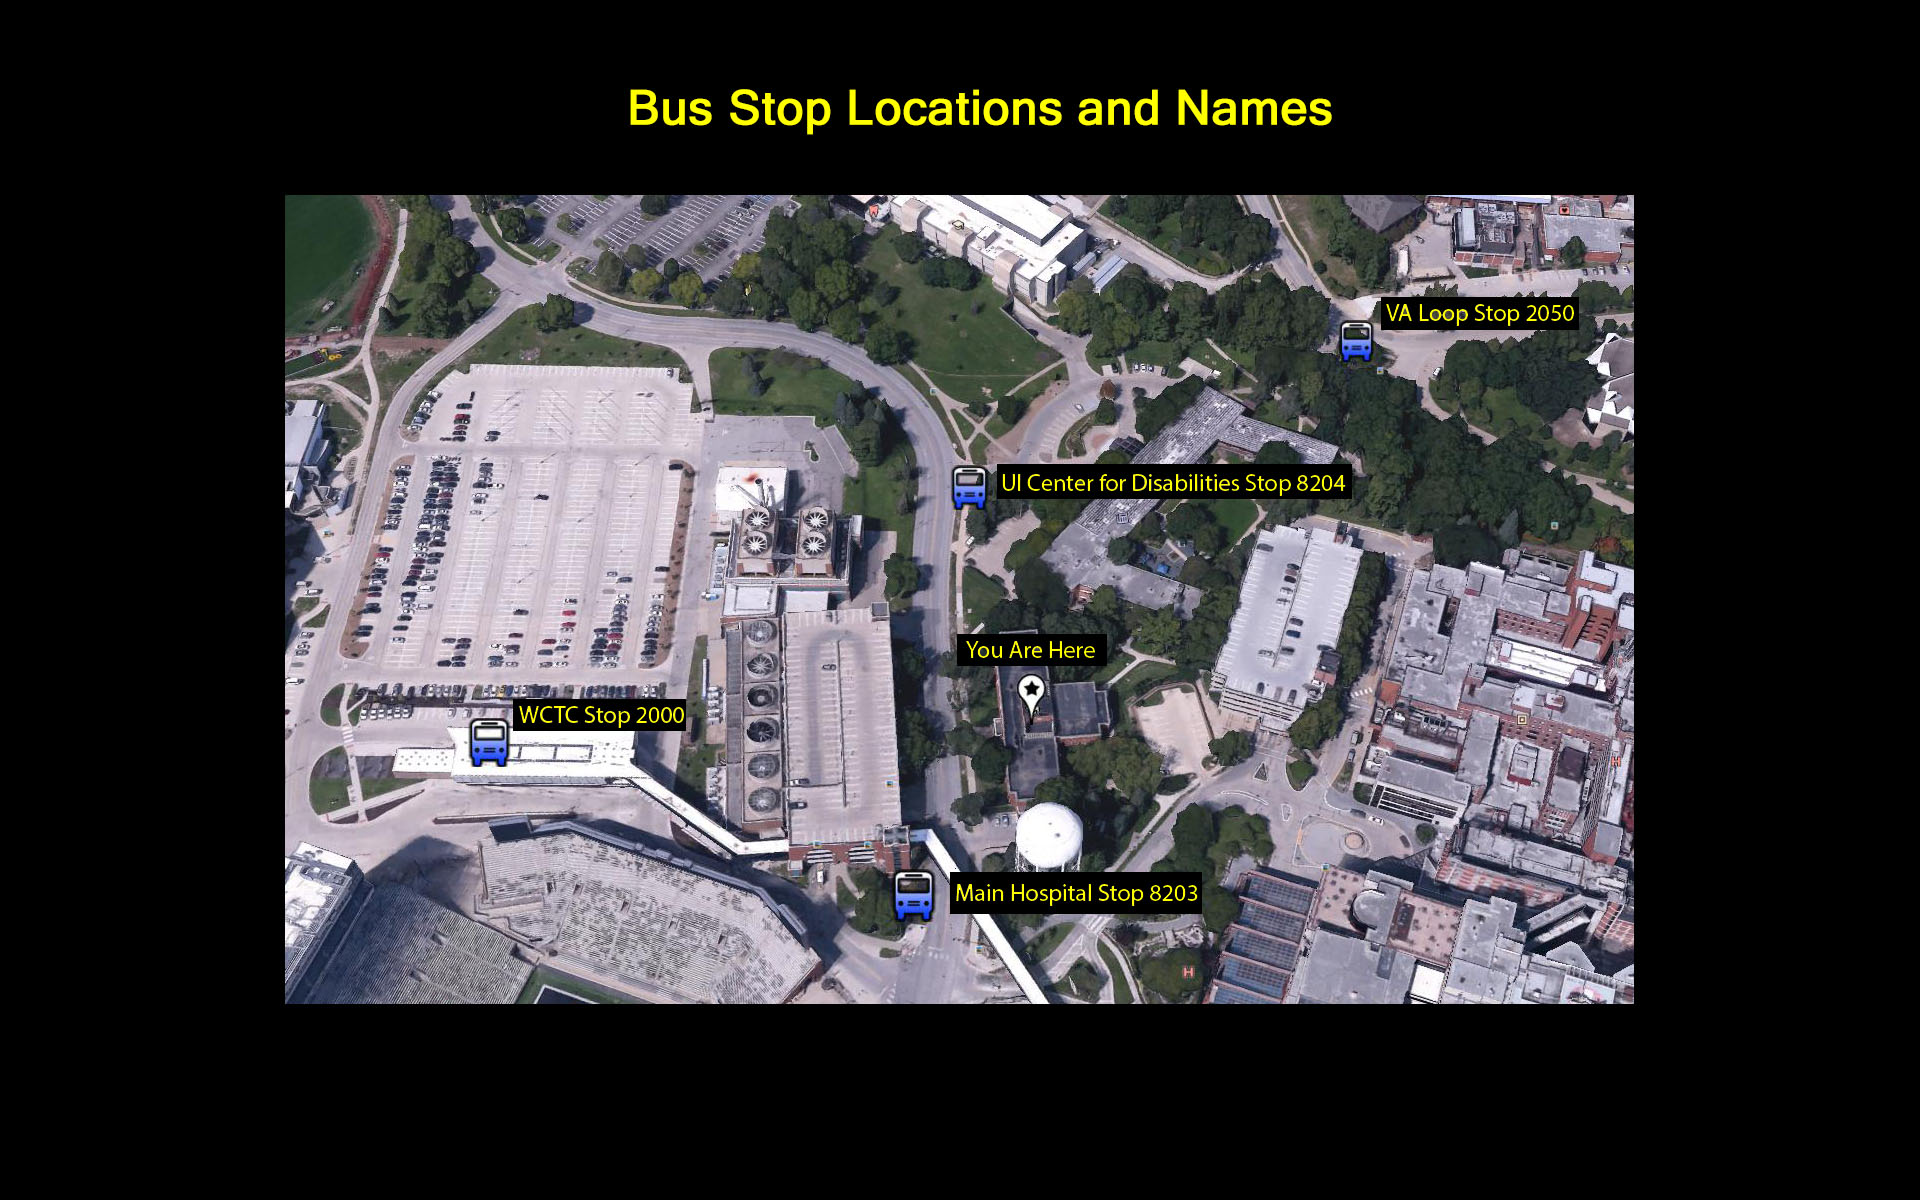 Bus Stops located near SHC Map